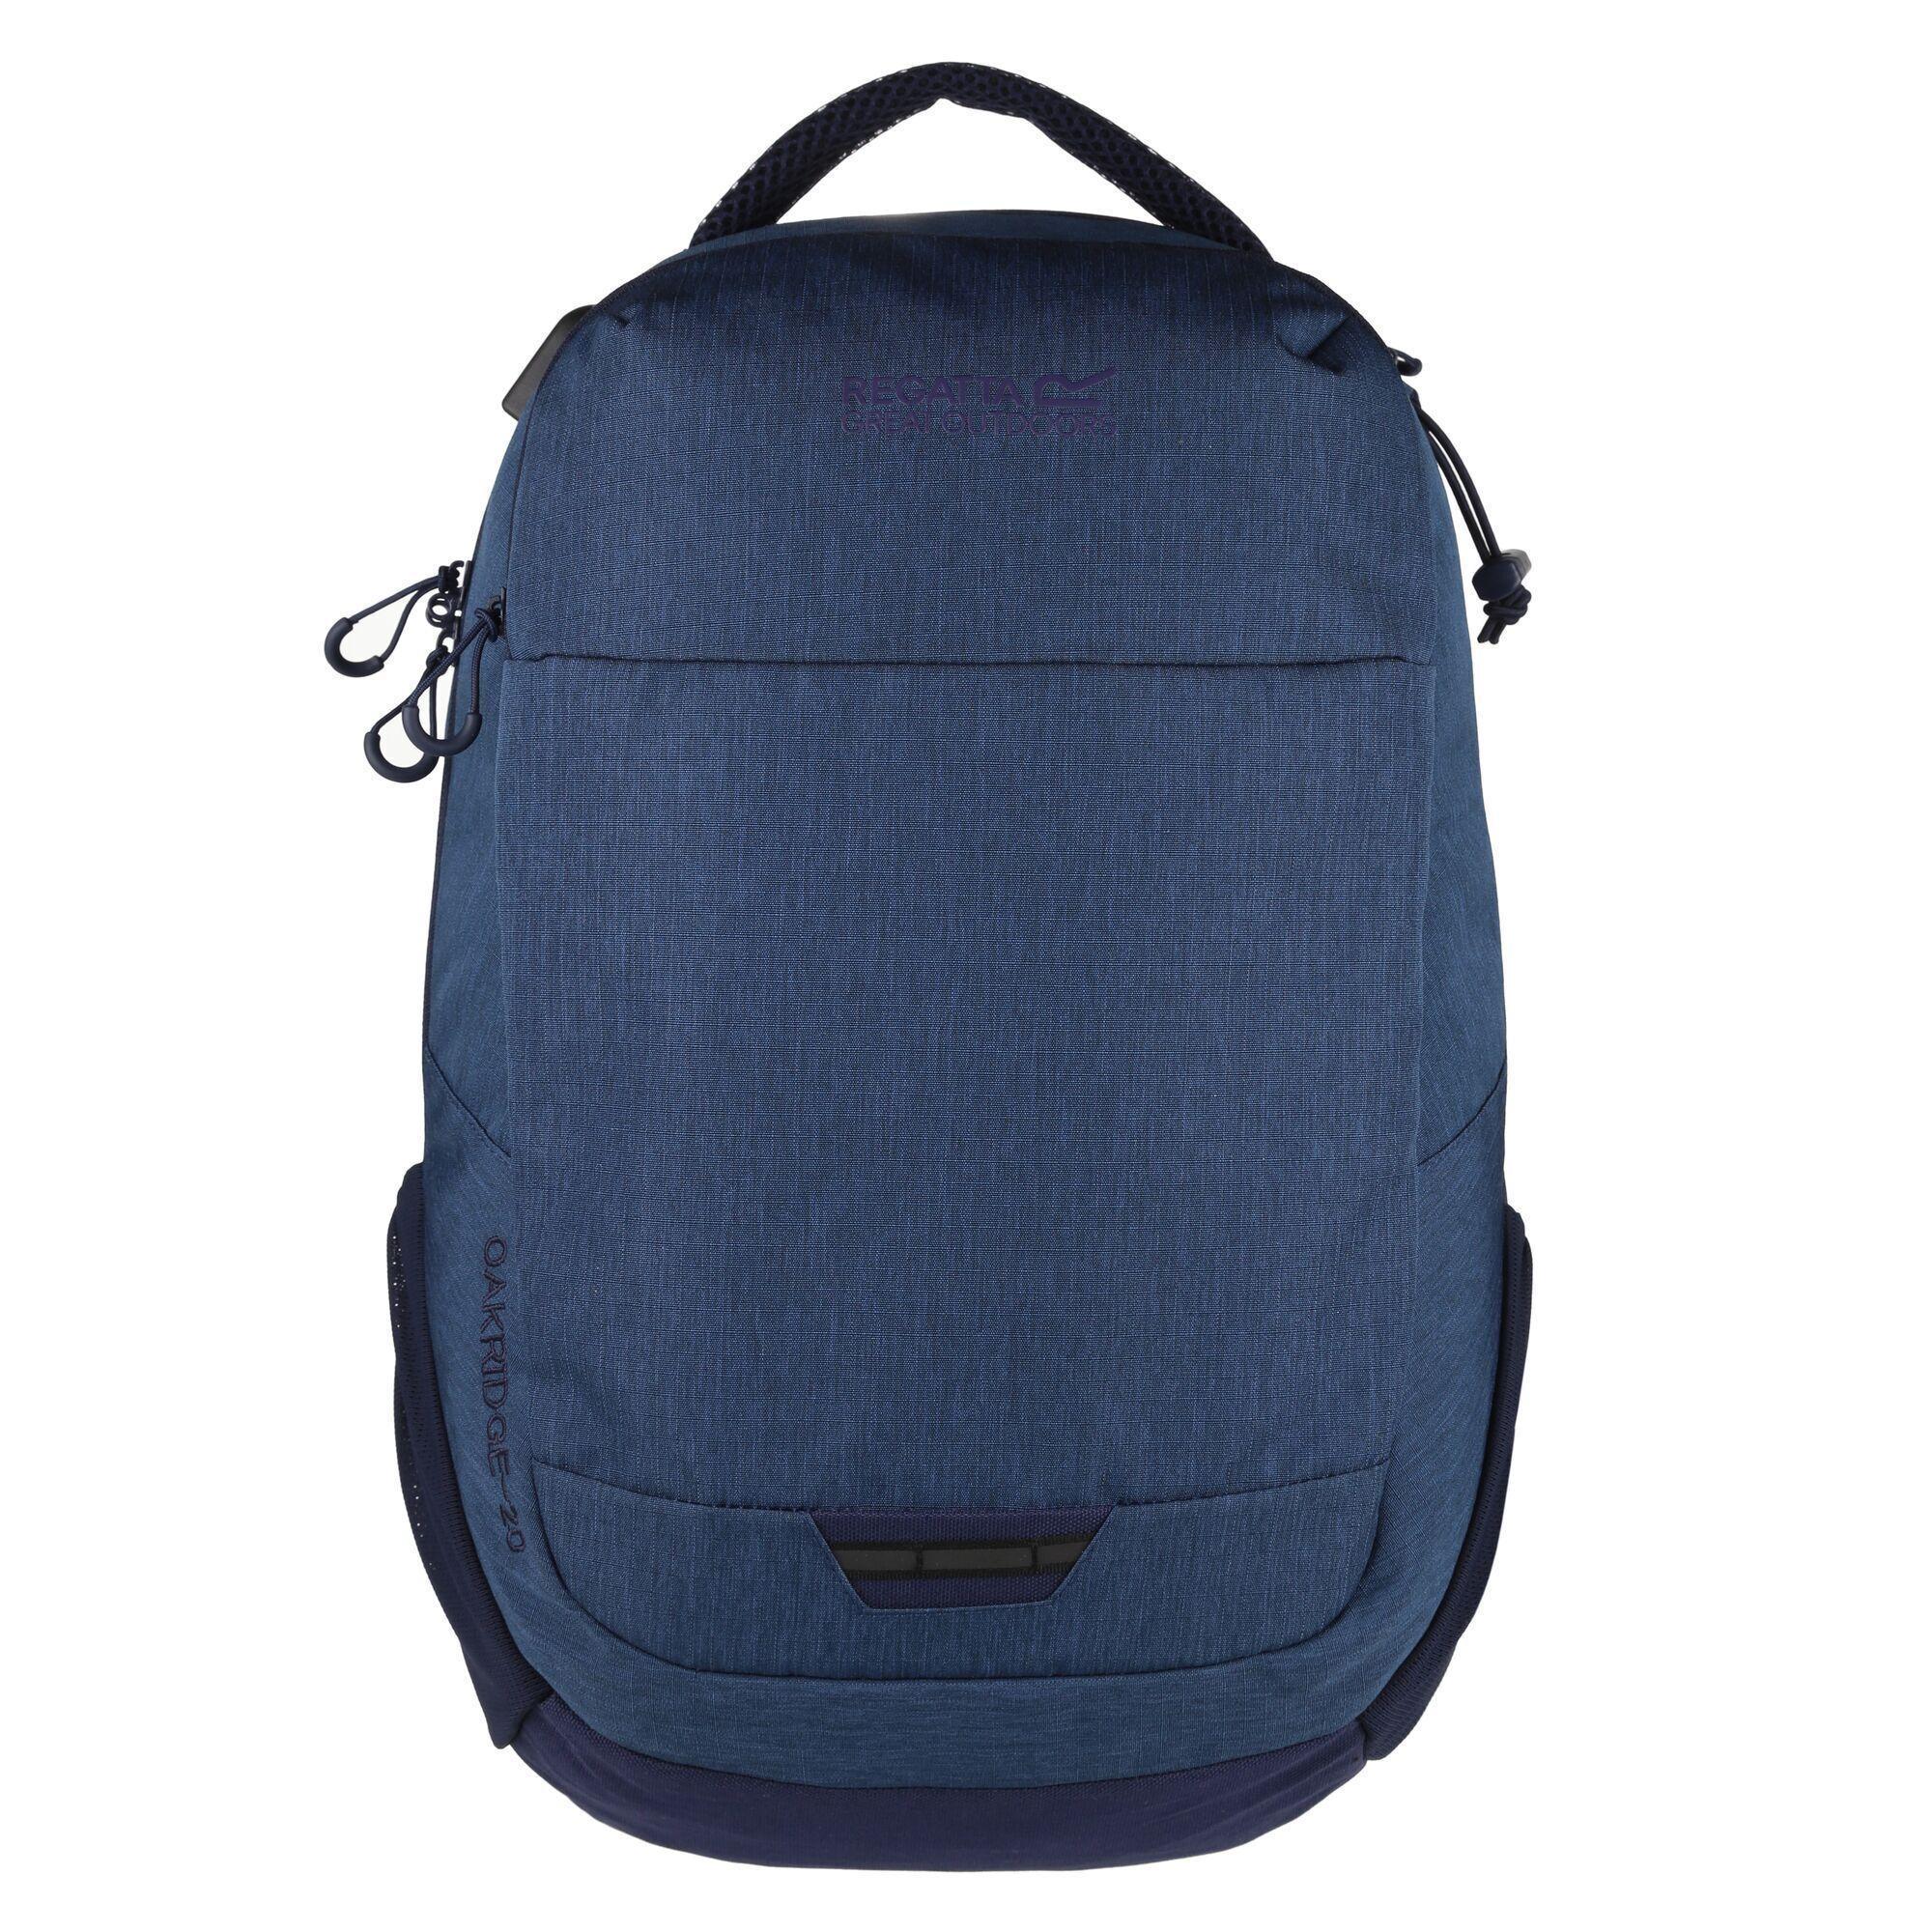 Regatta Unisex Adult Oakridge 20L Backpack (Navy/Dark Denim) (One Size)